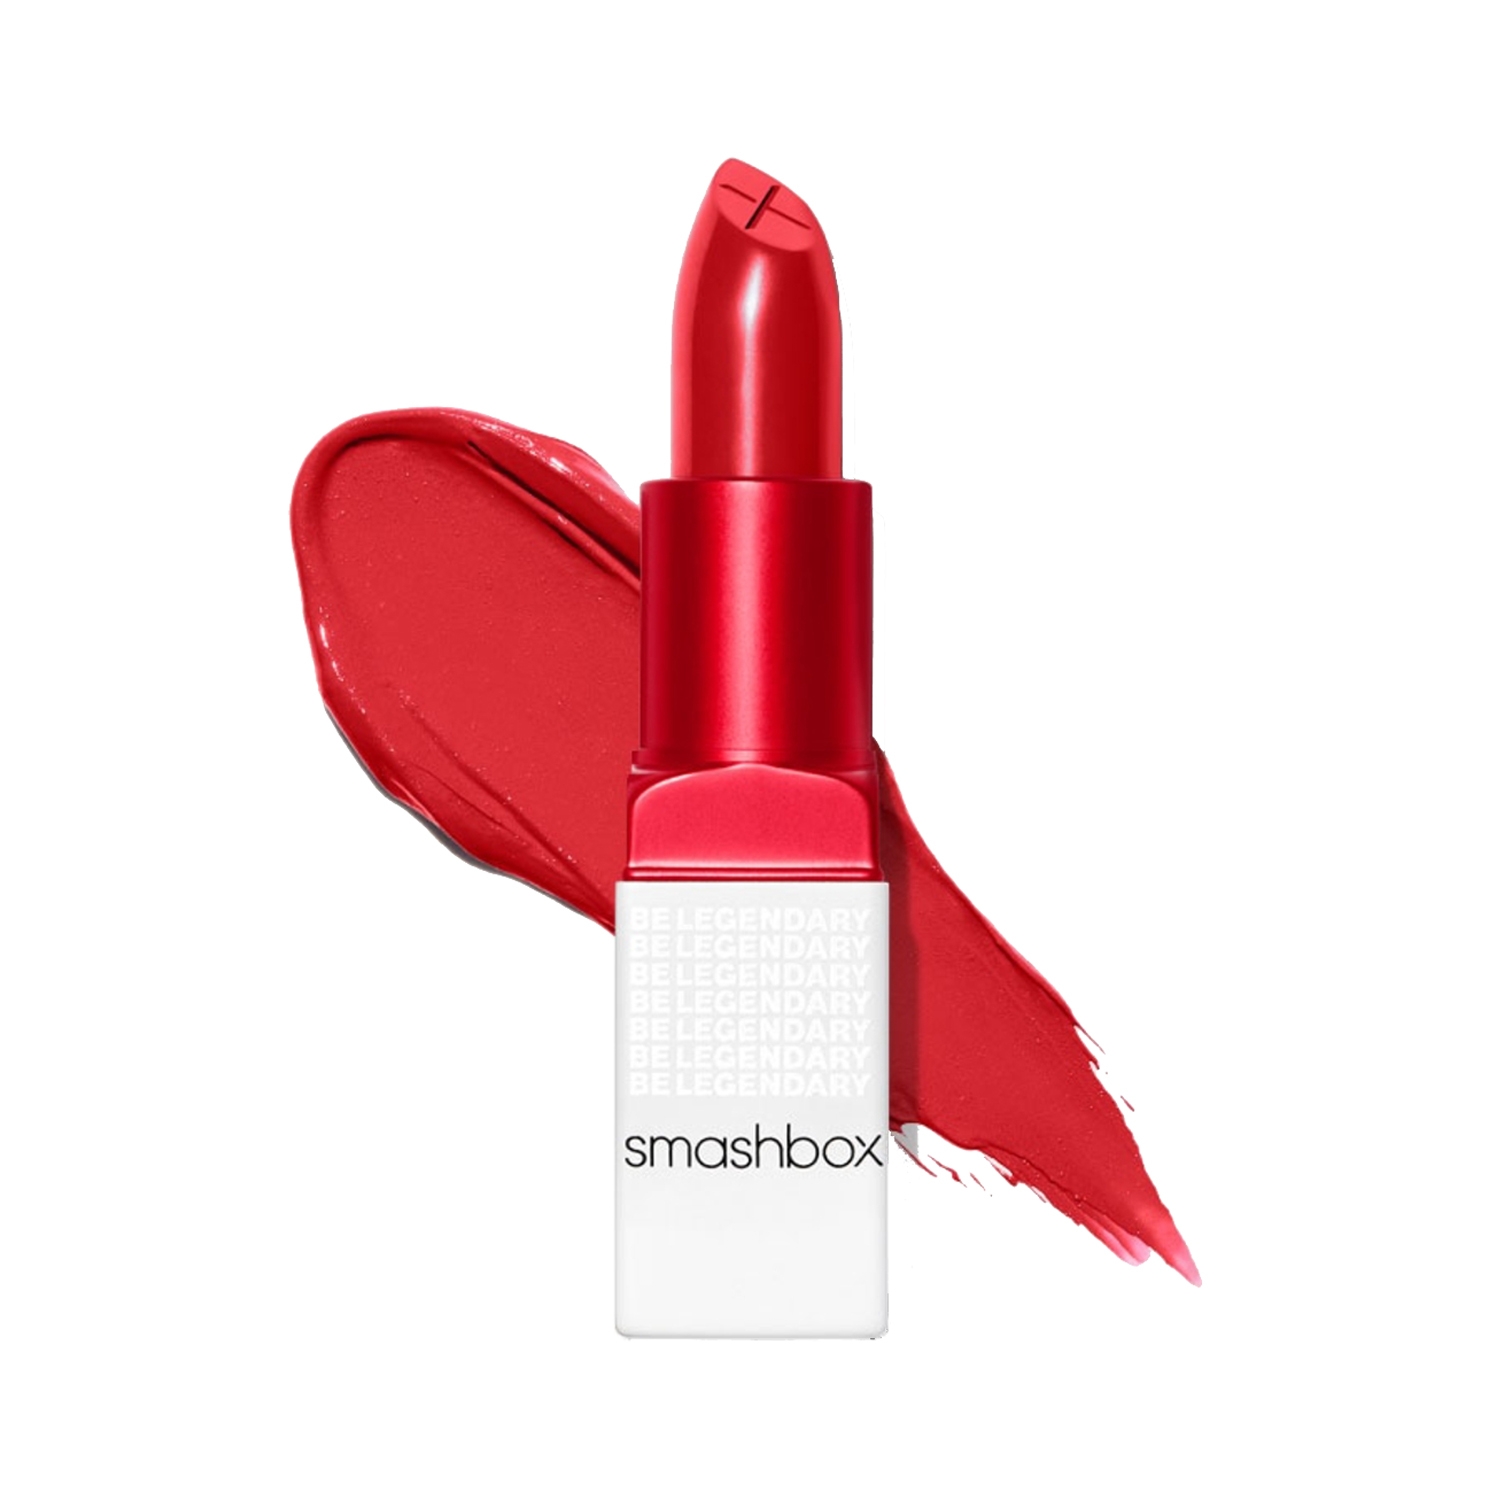 Smashbox | Smashbox Be Legendary Prime & Plush Lipstick - Orangey Red (3.4g)